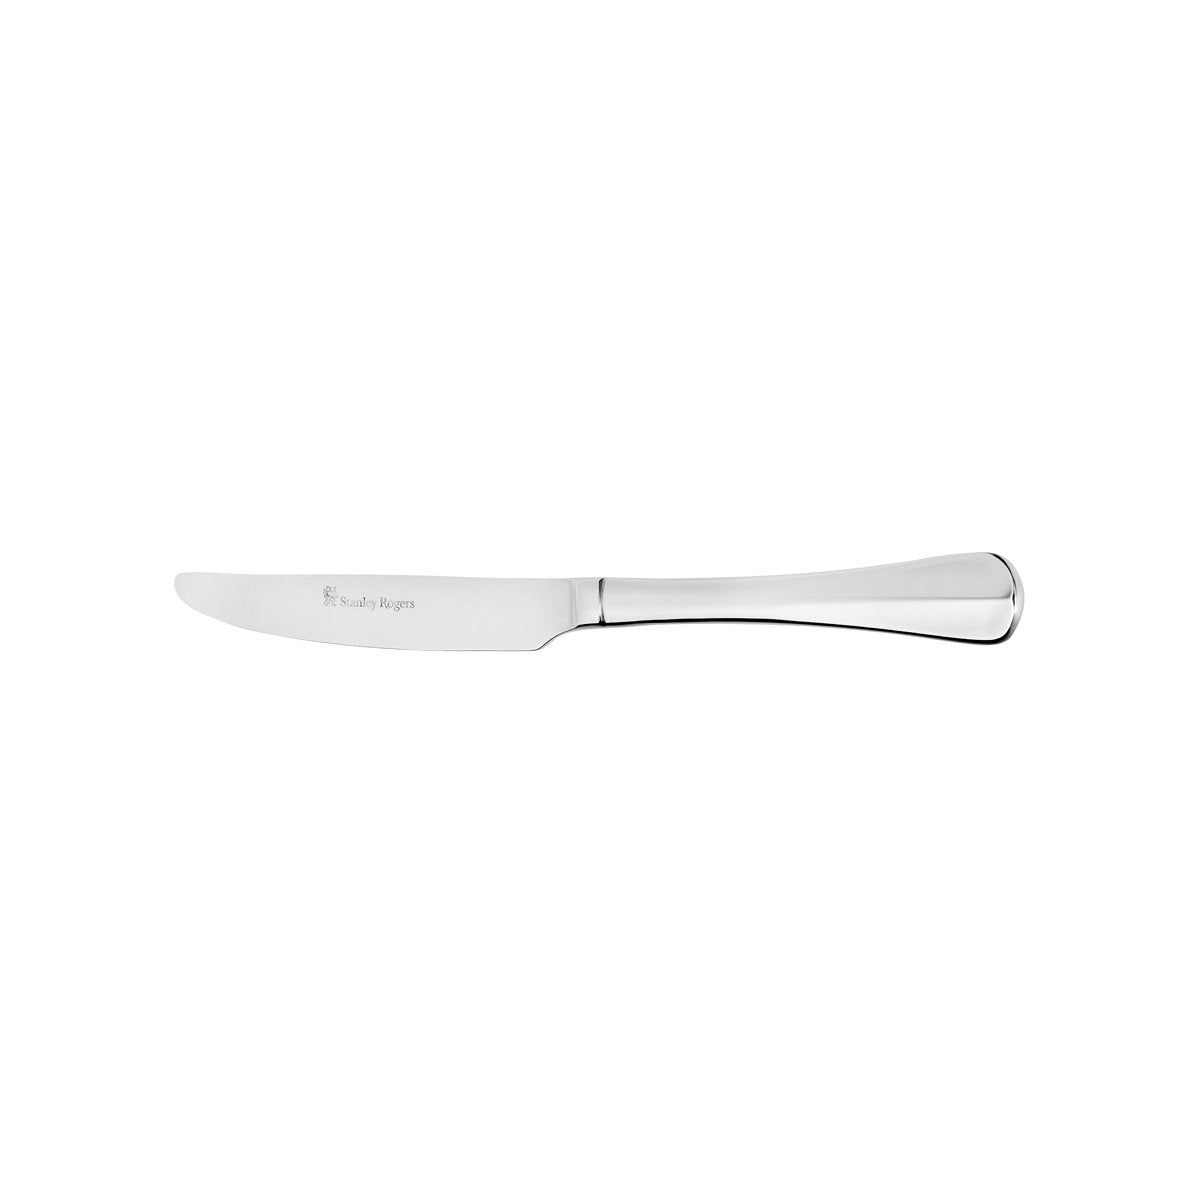 CC20872 Stanley Rogers Baguette Table Knife Tomkin Australia Hospitality Supplies